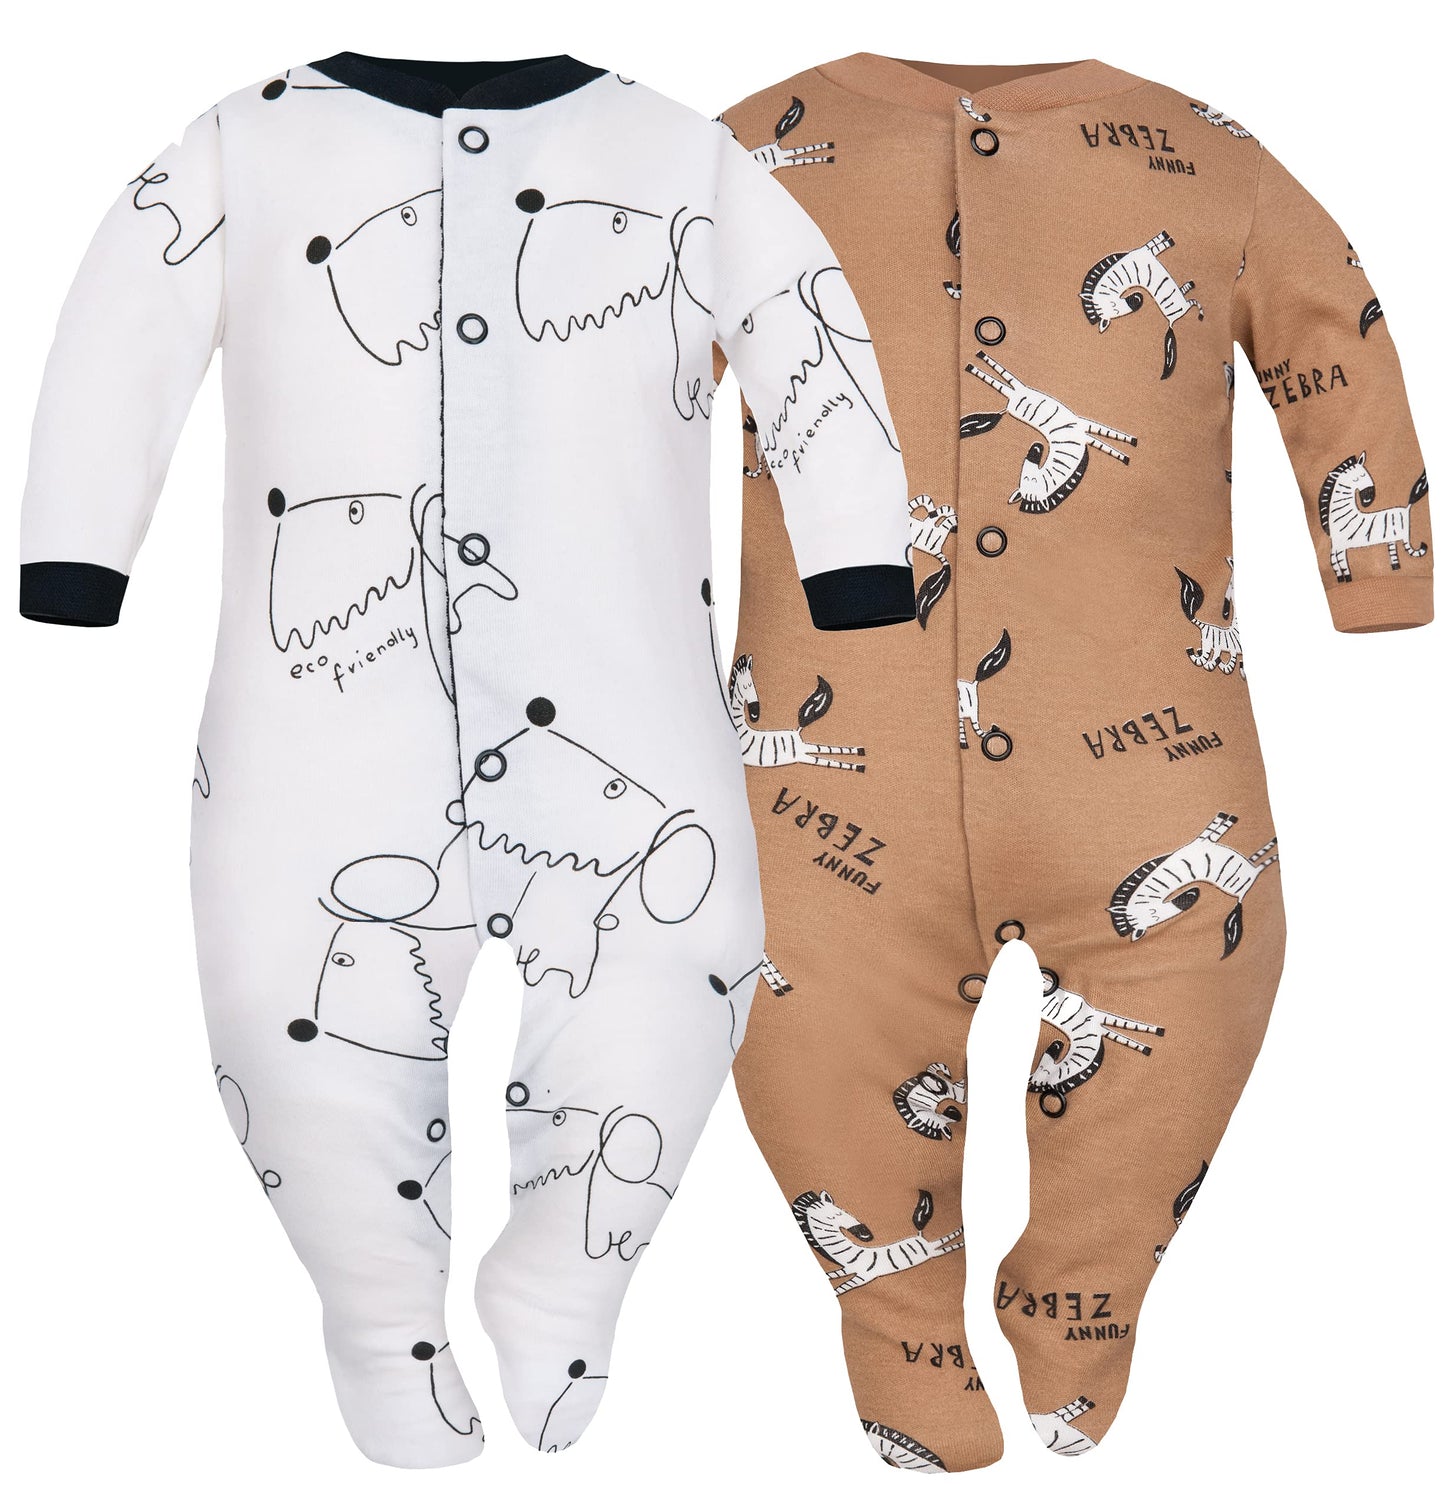 Sibinulo Boys Girls Pyjamas Baby Romper Sleepsuit - Sizes 56-92 (0-24 Months, Sizes 9-24 Non-Slip Feet) - Pack of 2 (3-6 Months)